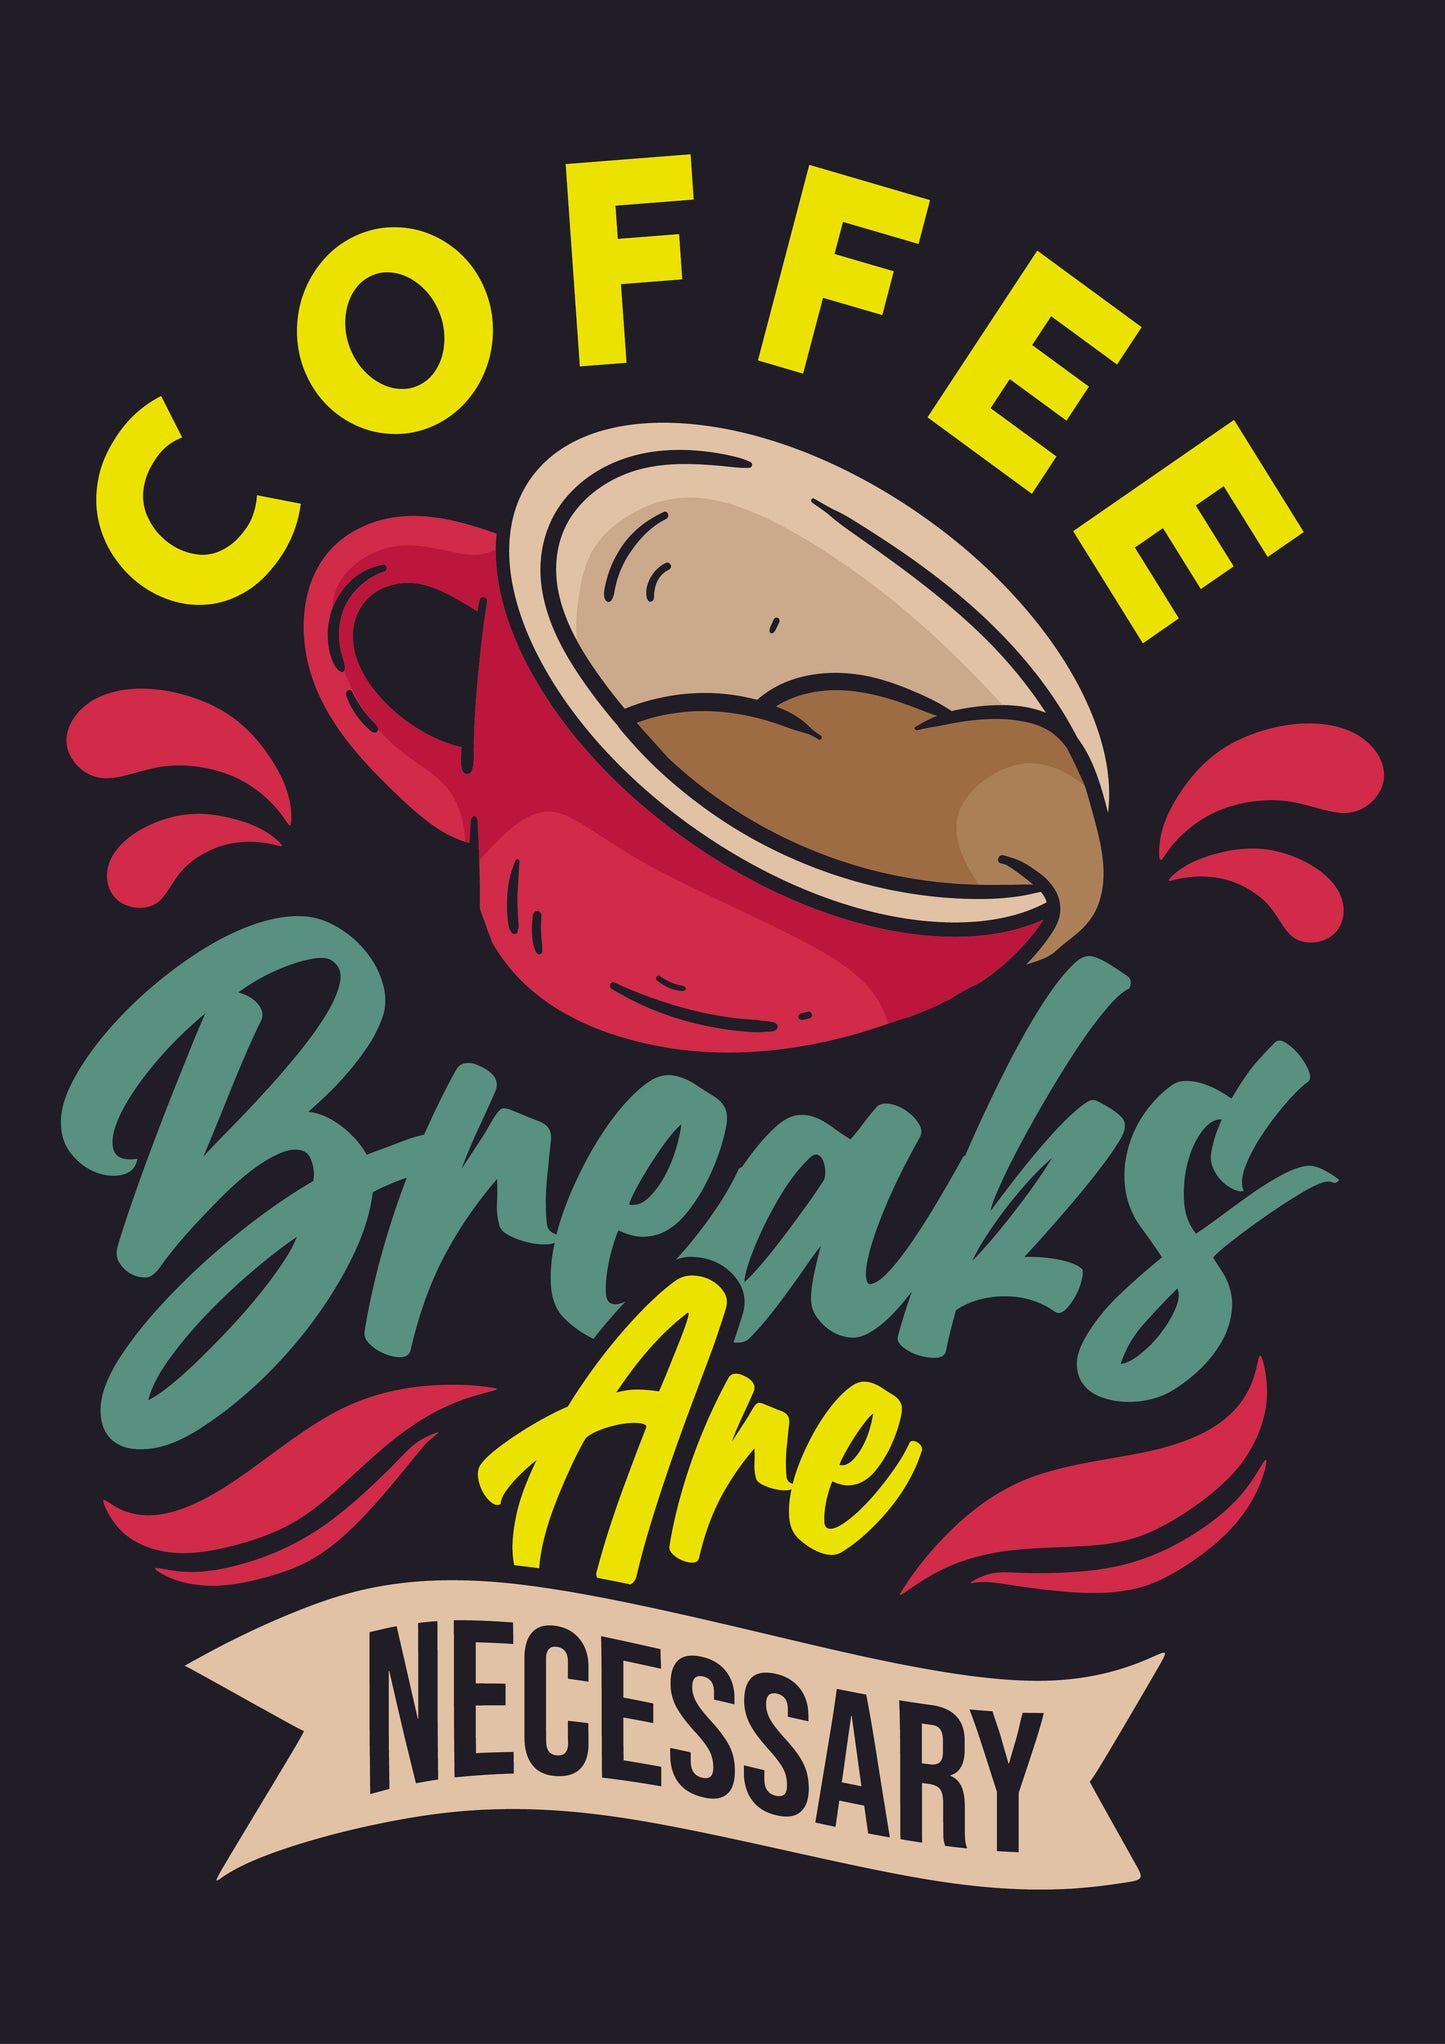 Coffee Breaks are Necessary